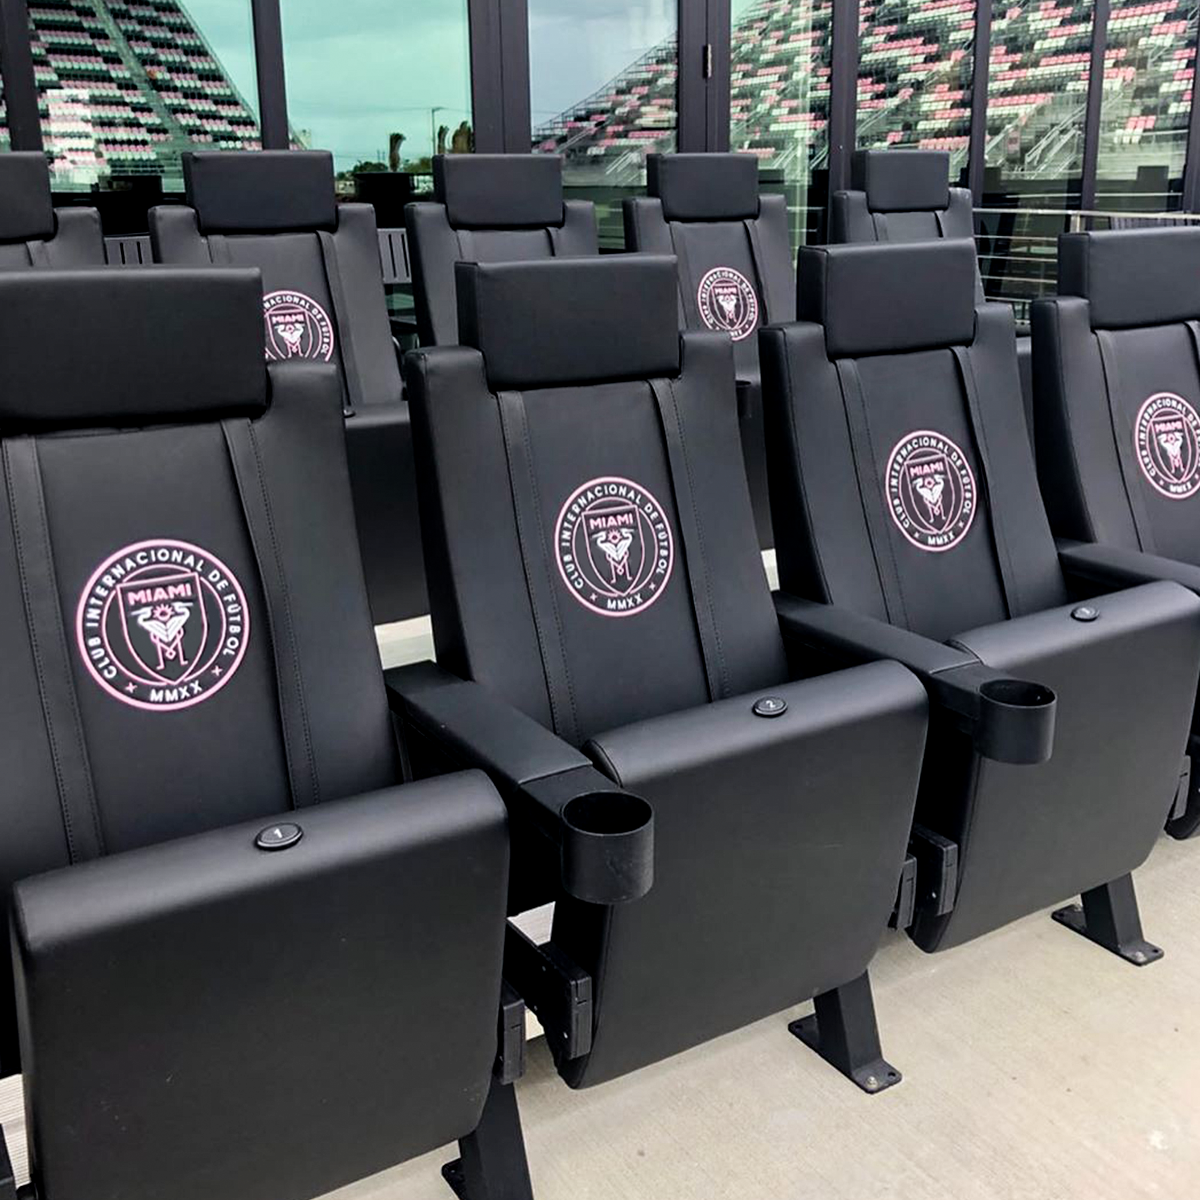 SuiteMax 3.5 VIP Seats with Arizona Coyotes Secondary Logo